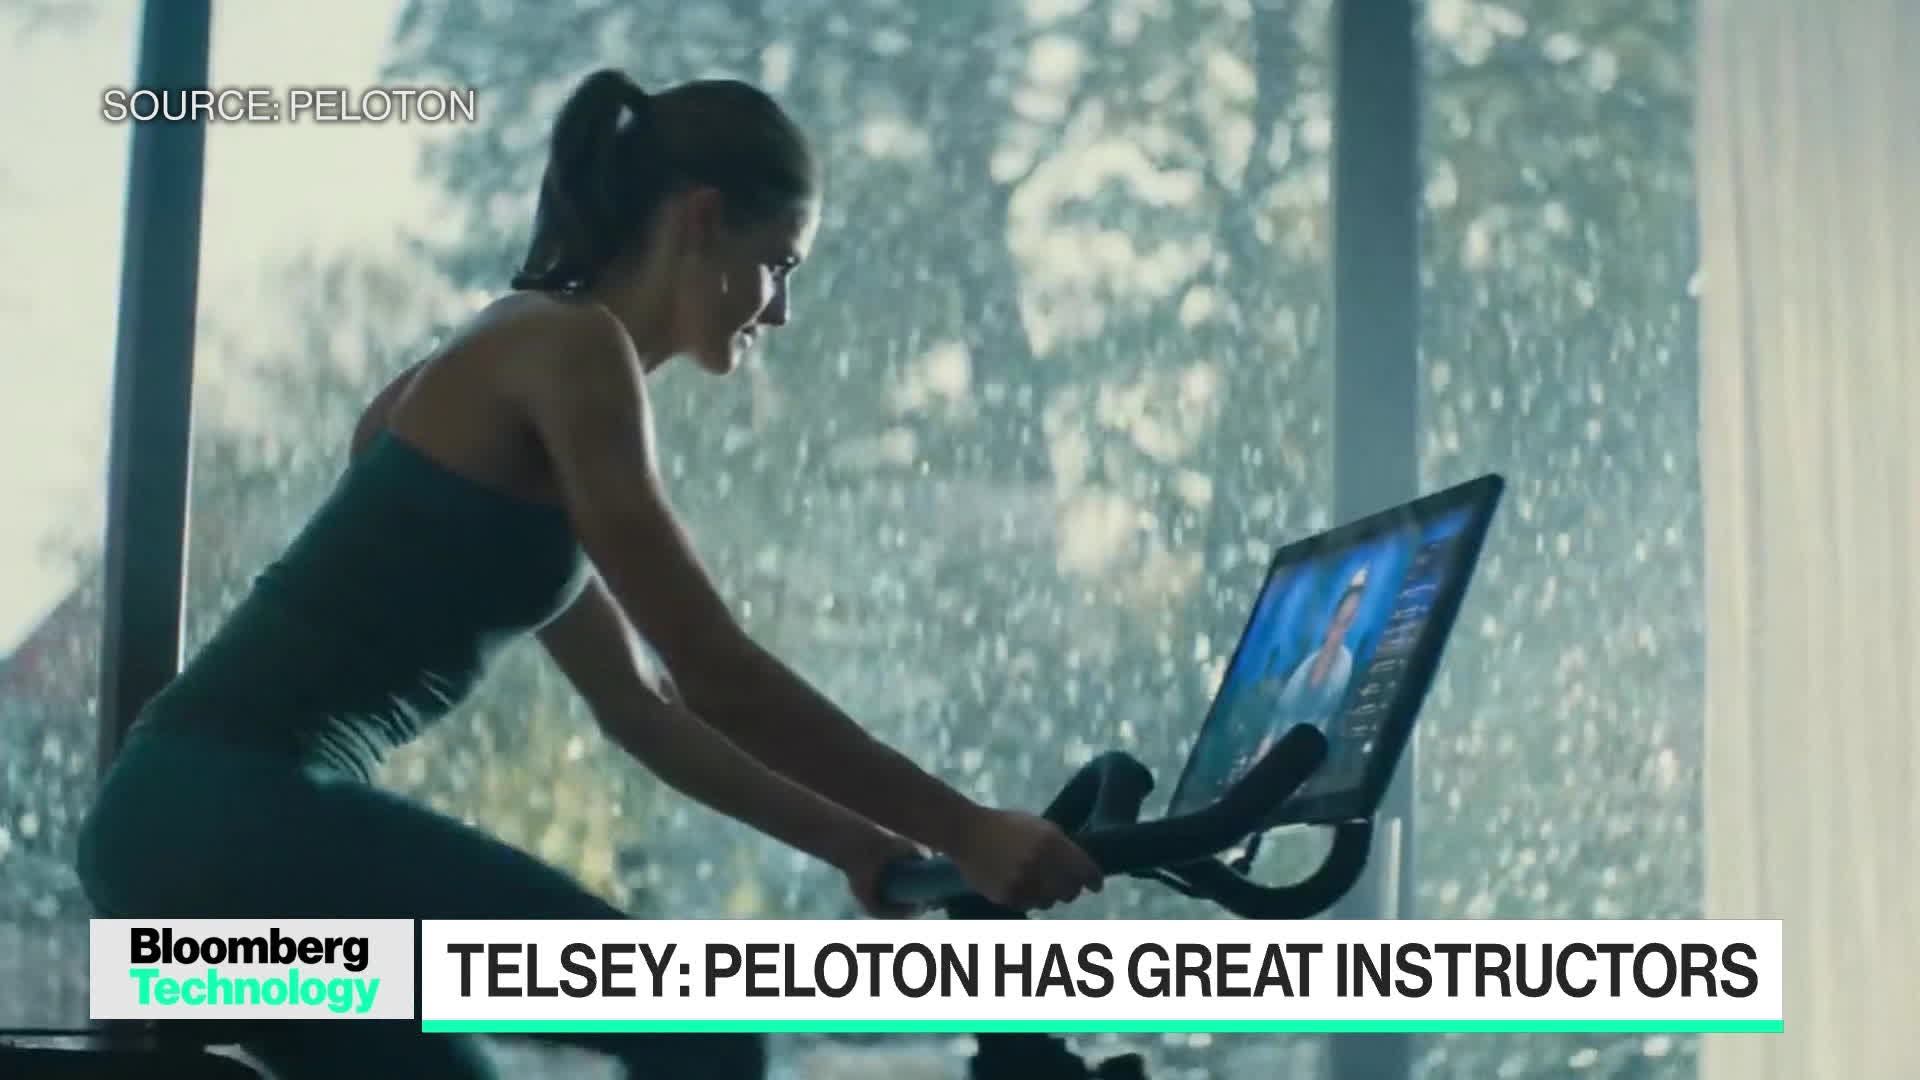 Lululemon, Peloton to Partner on Fitness Content, Apparel - Bloomberg